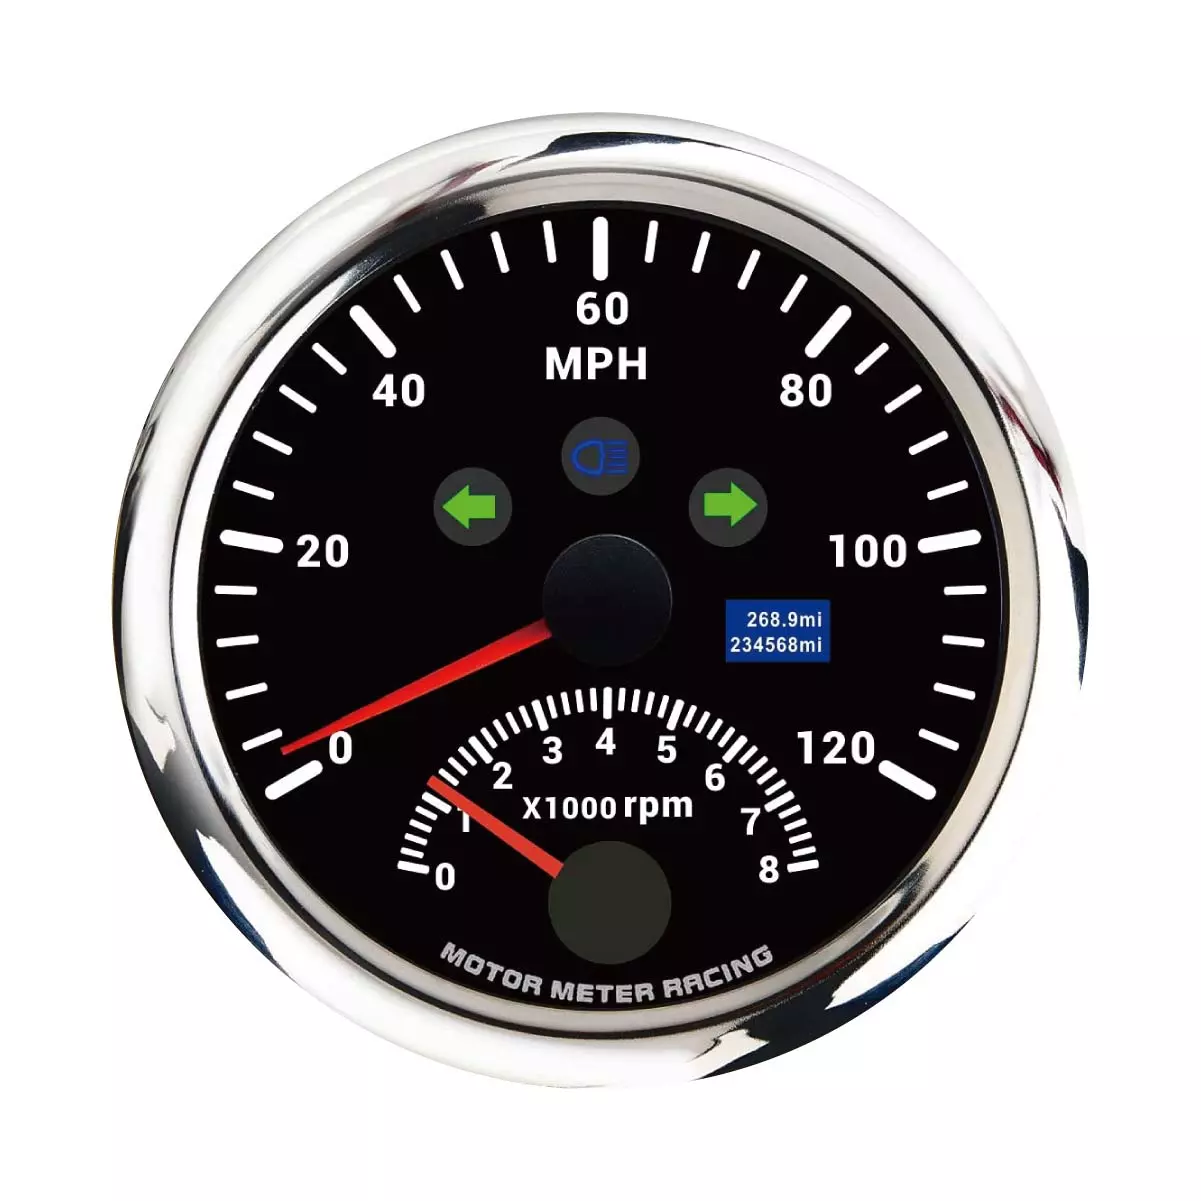 MOTOR METER RACING W Pro Tachometer 8000 RPM Programmable Waterproof Black Dial White LED 